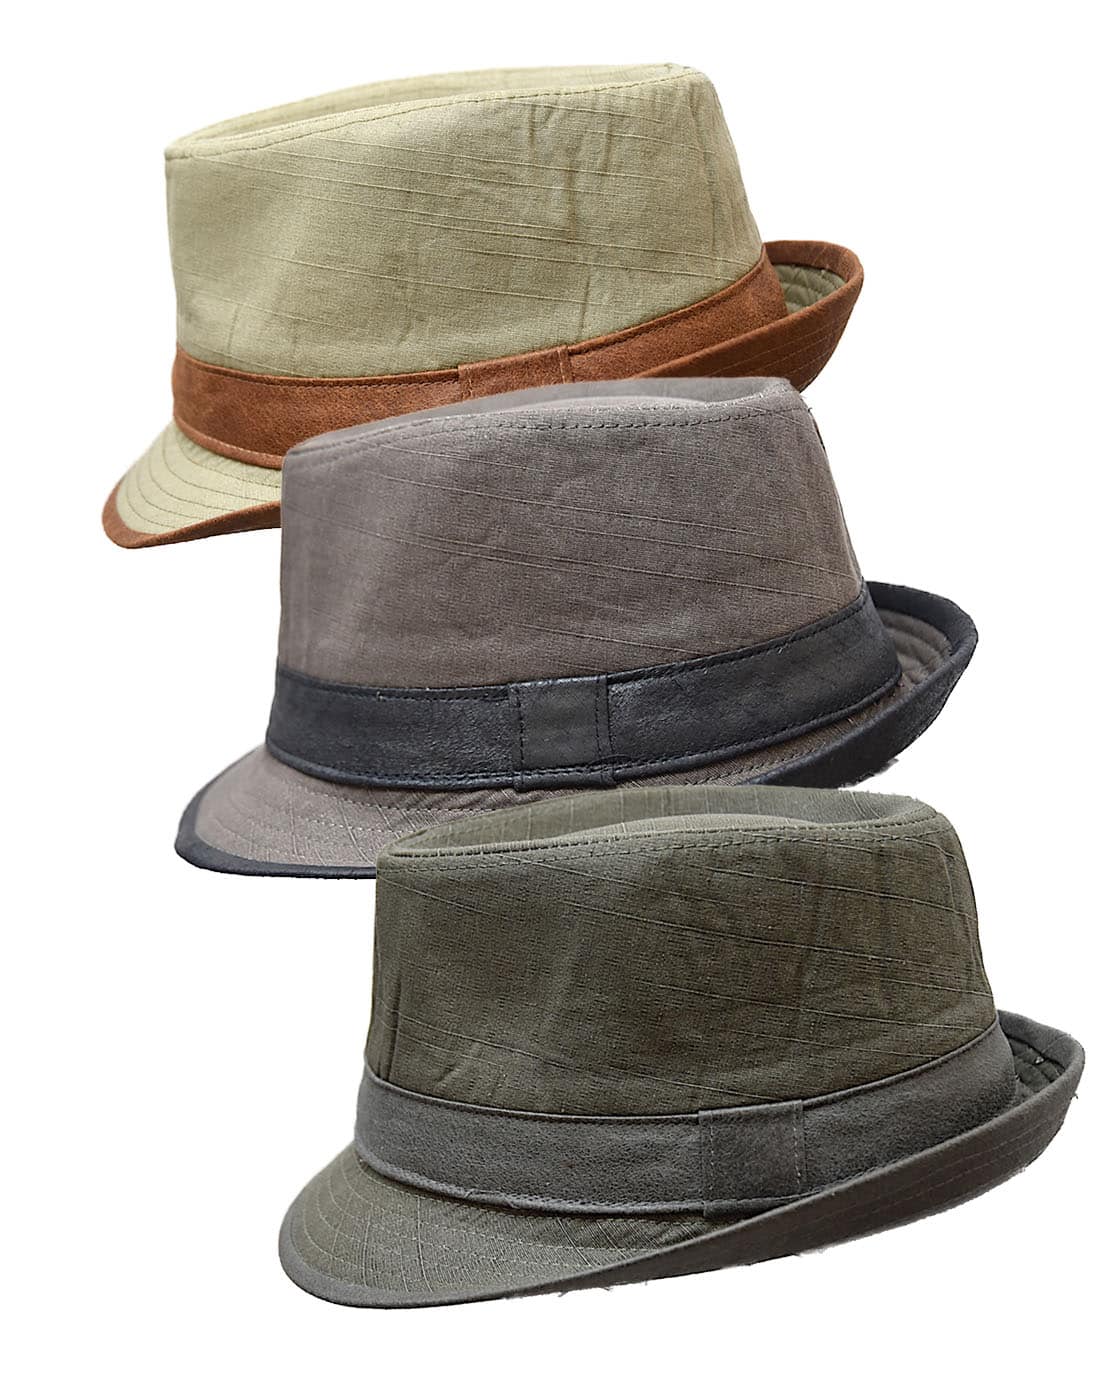 SKA Plain Fedoras Hats for Kids Combo 1 - Set of Three